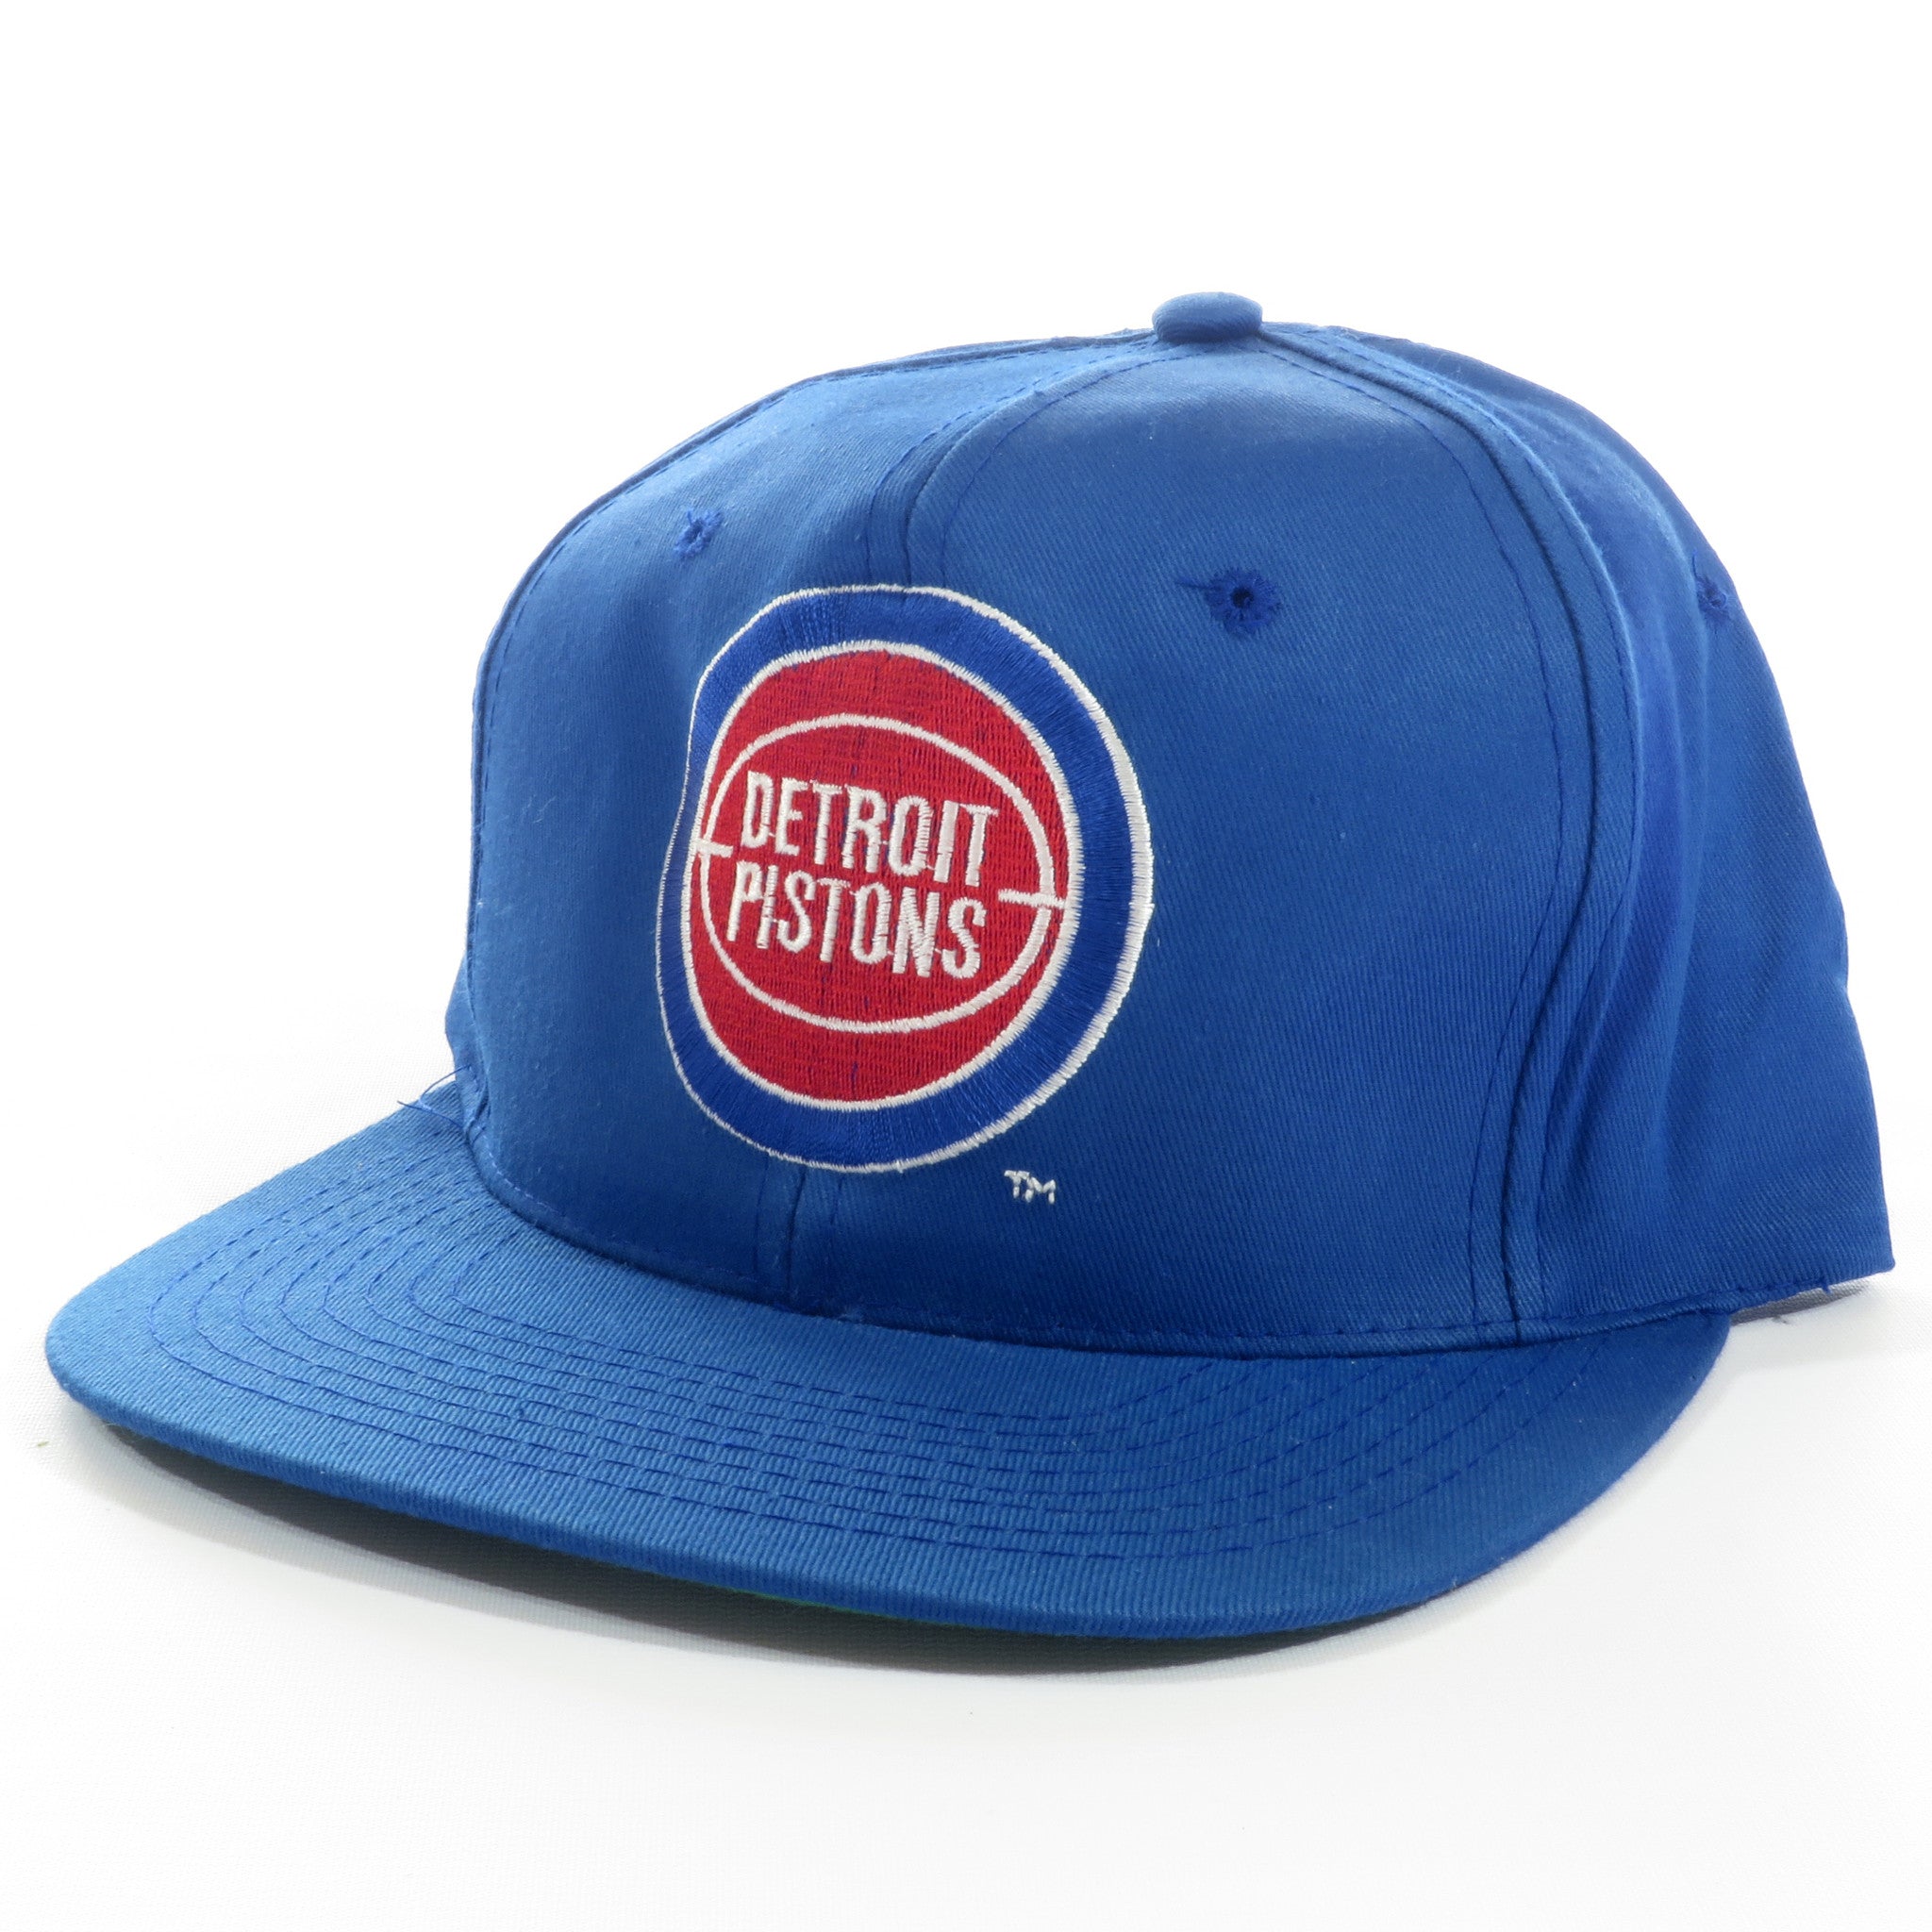 Detroit Pistons Snapback Hat